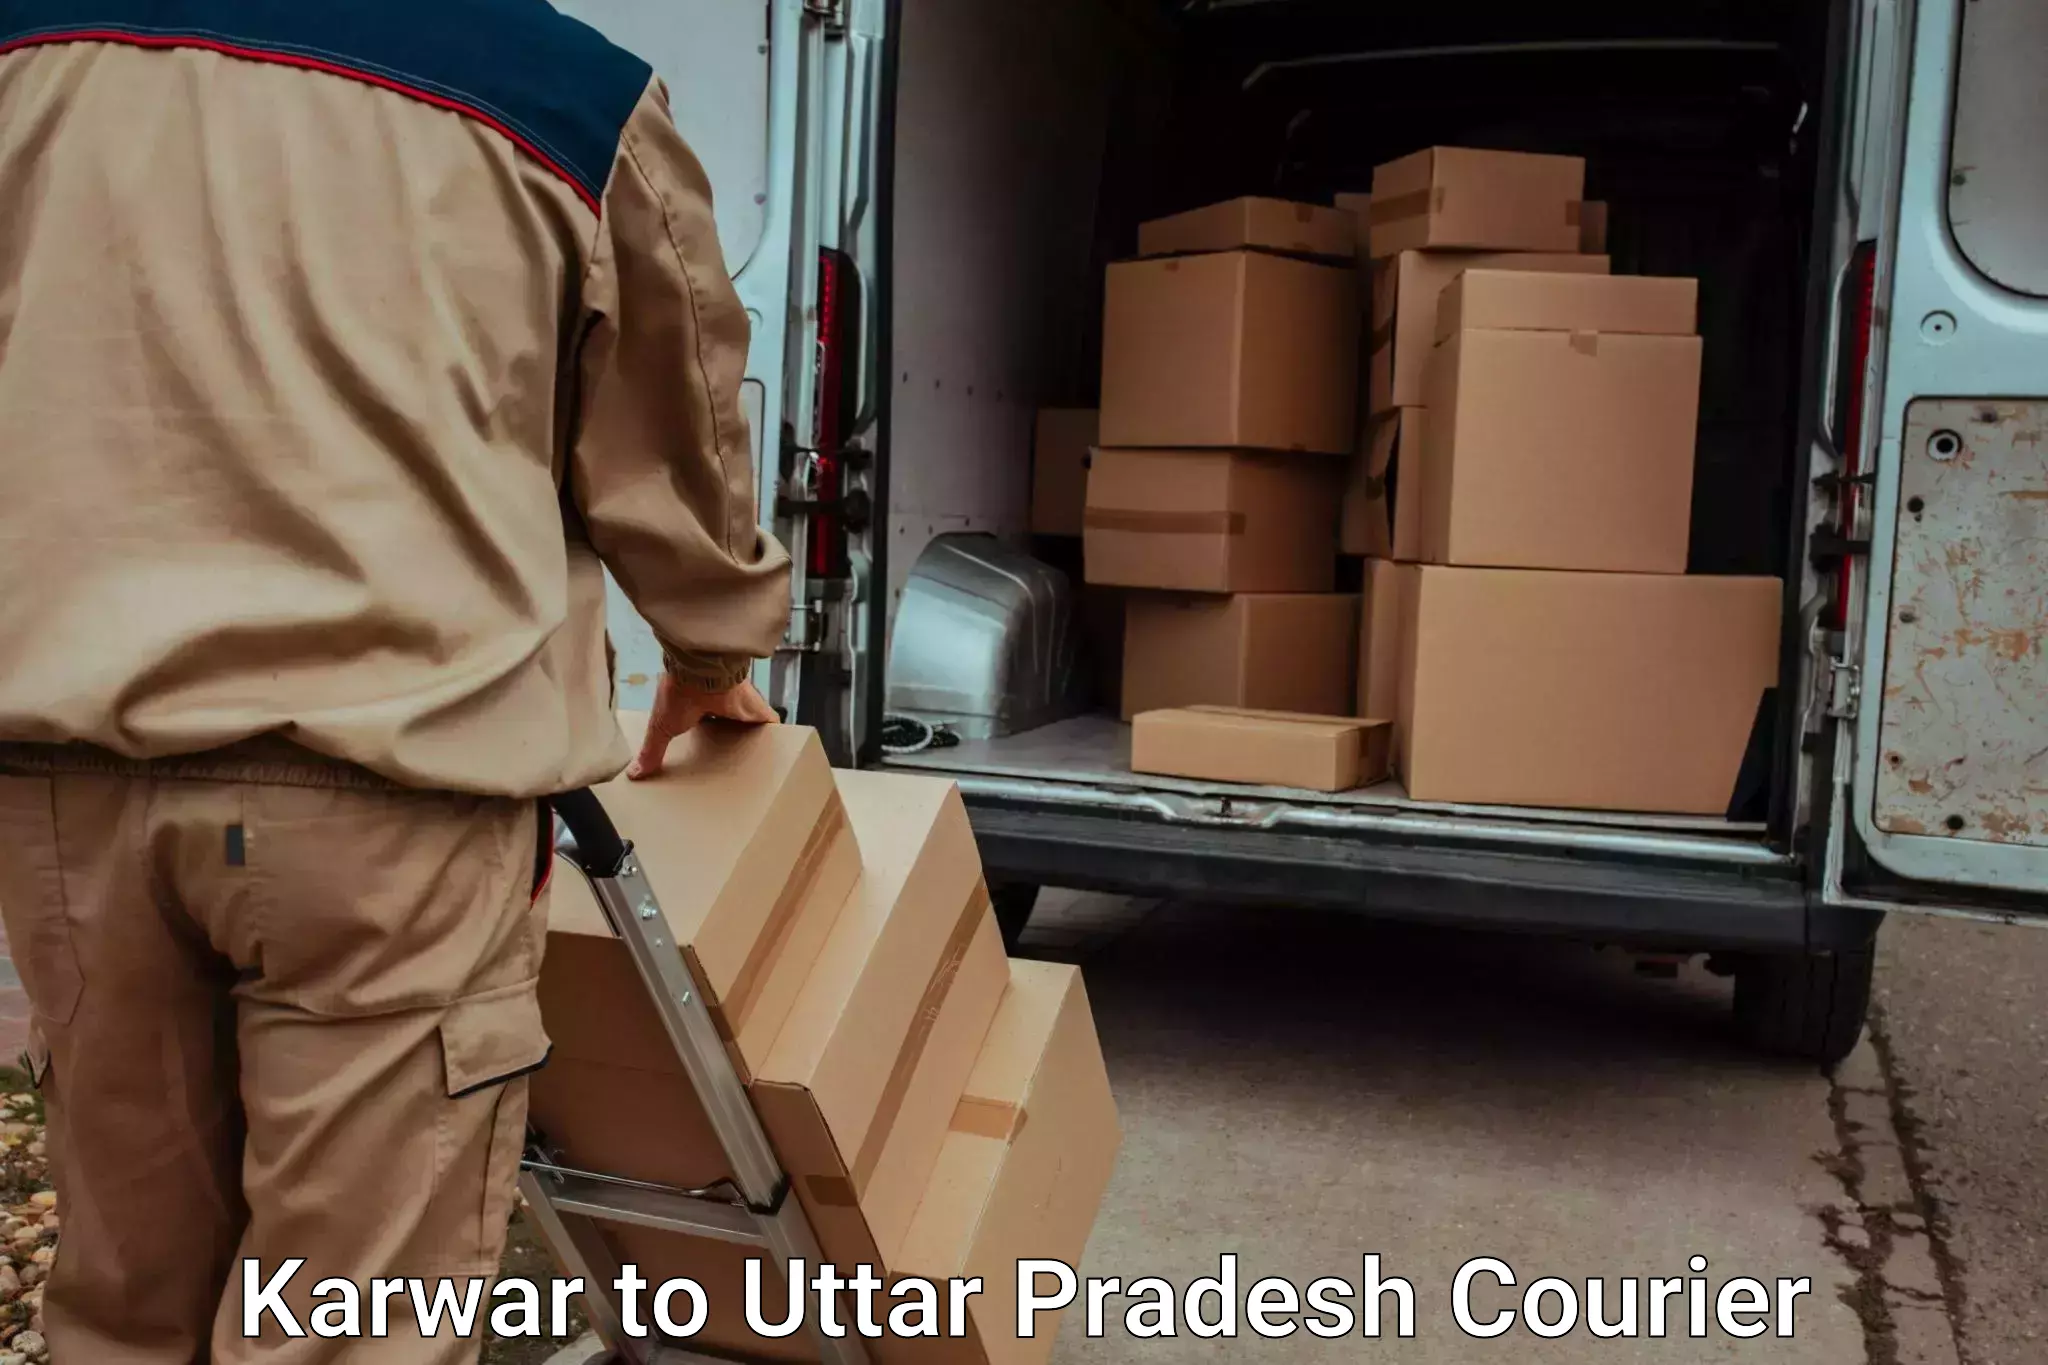 Trusted furniture transport in Karwar to Ambedkar Nagar